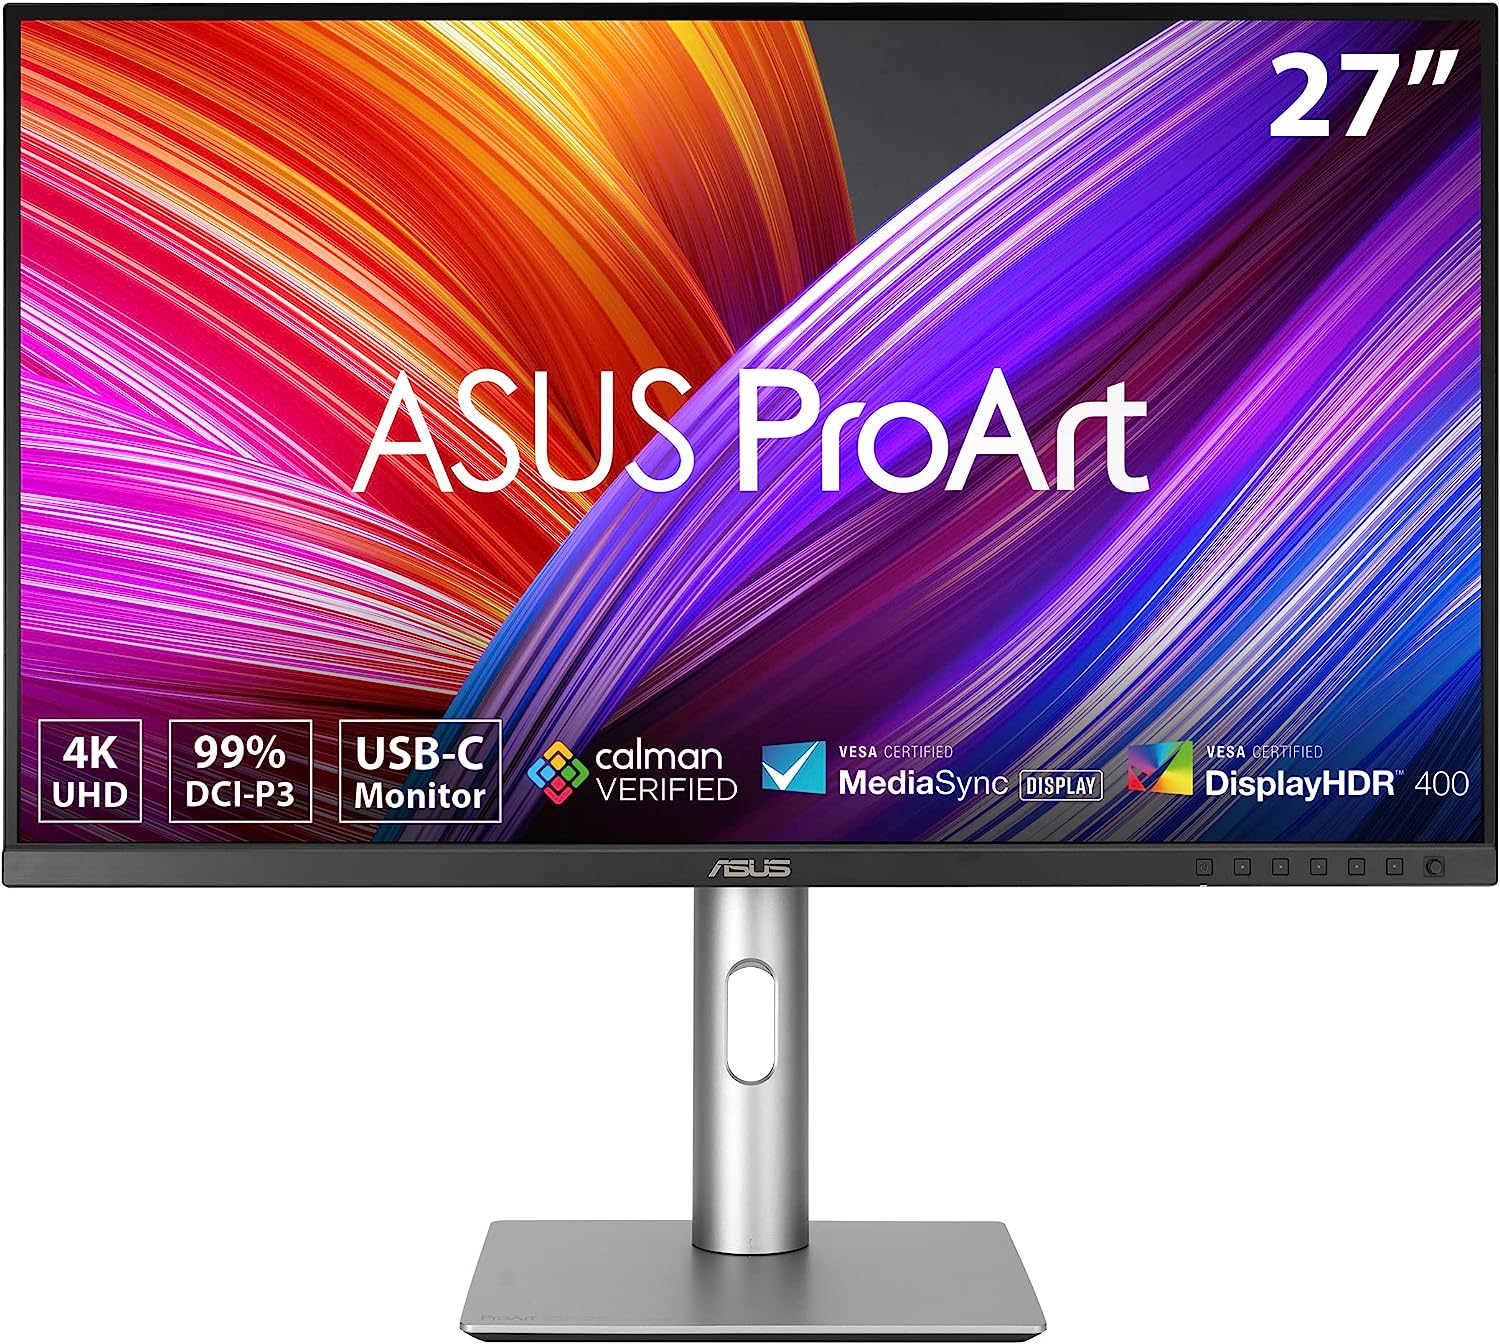 ASUS ProArt Display 27” 4K HDR Professional Monitor [...]